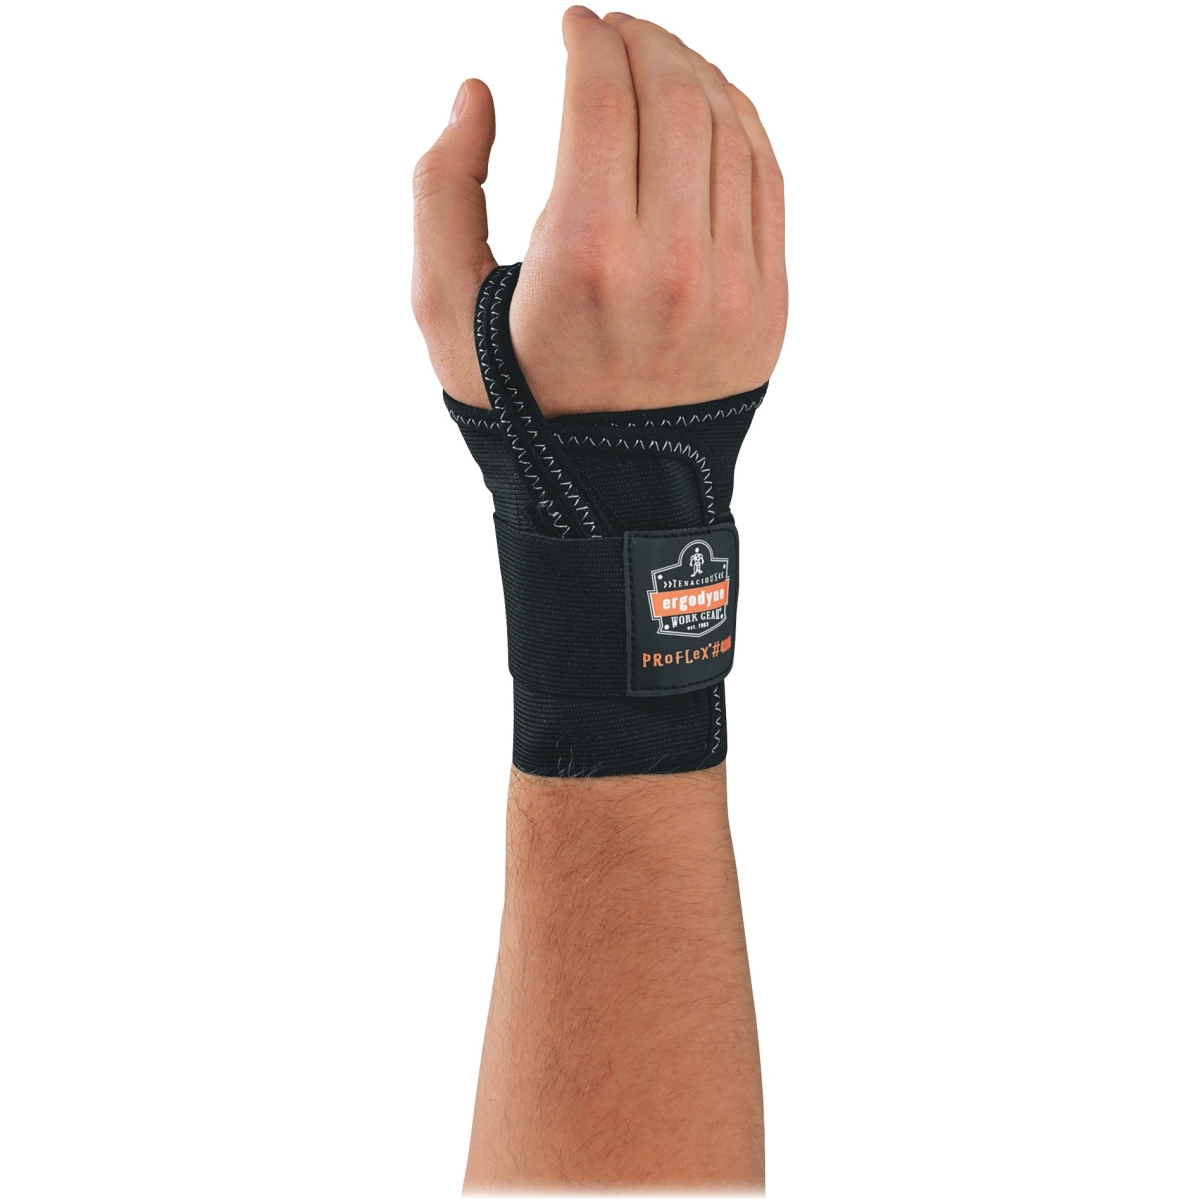 Ego70002 Single Strap Wrist Support - Black